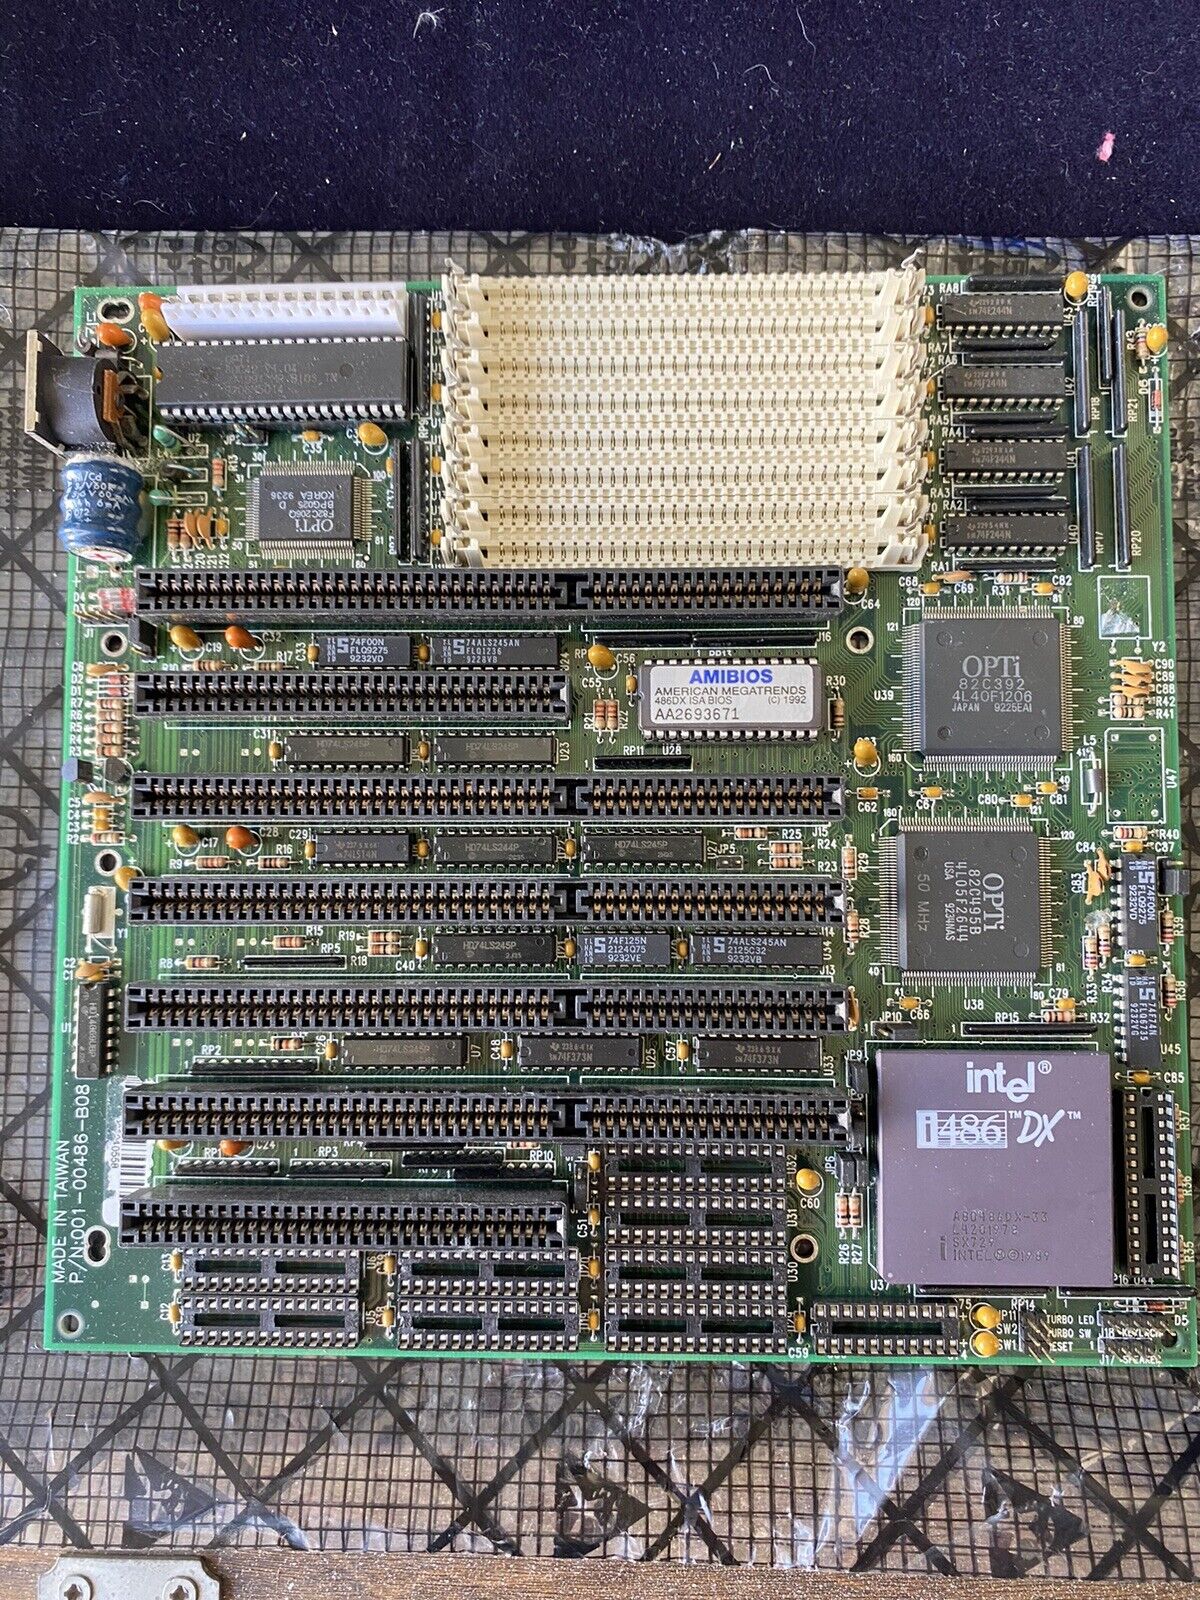 Vintage Motherboard Ambios 486DX ISA Bios + Intel i486 DX 001-00486-C08